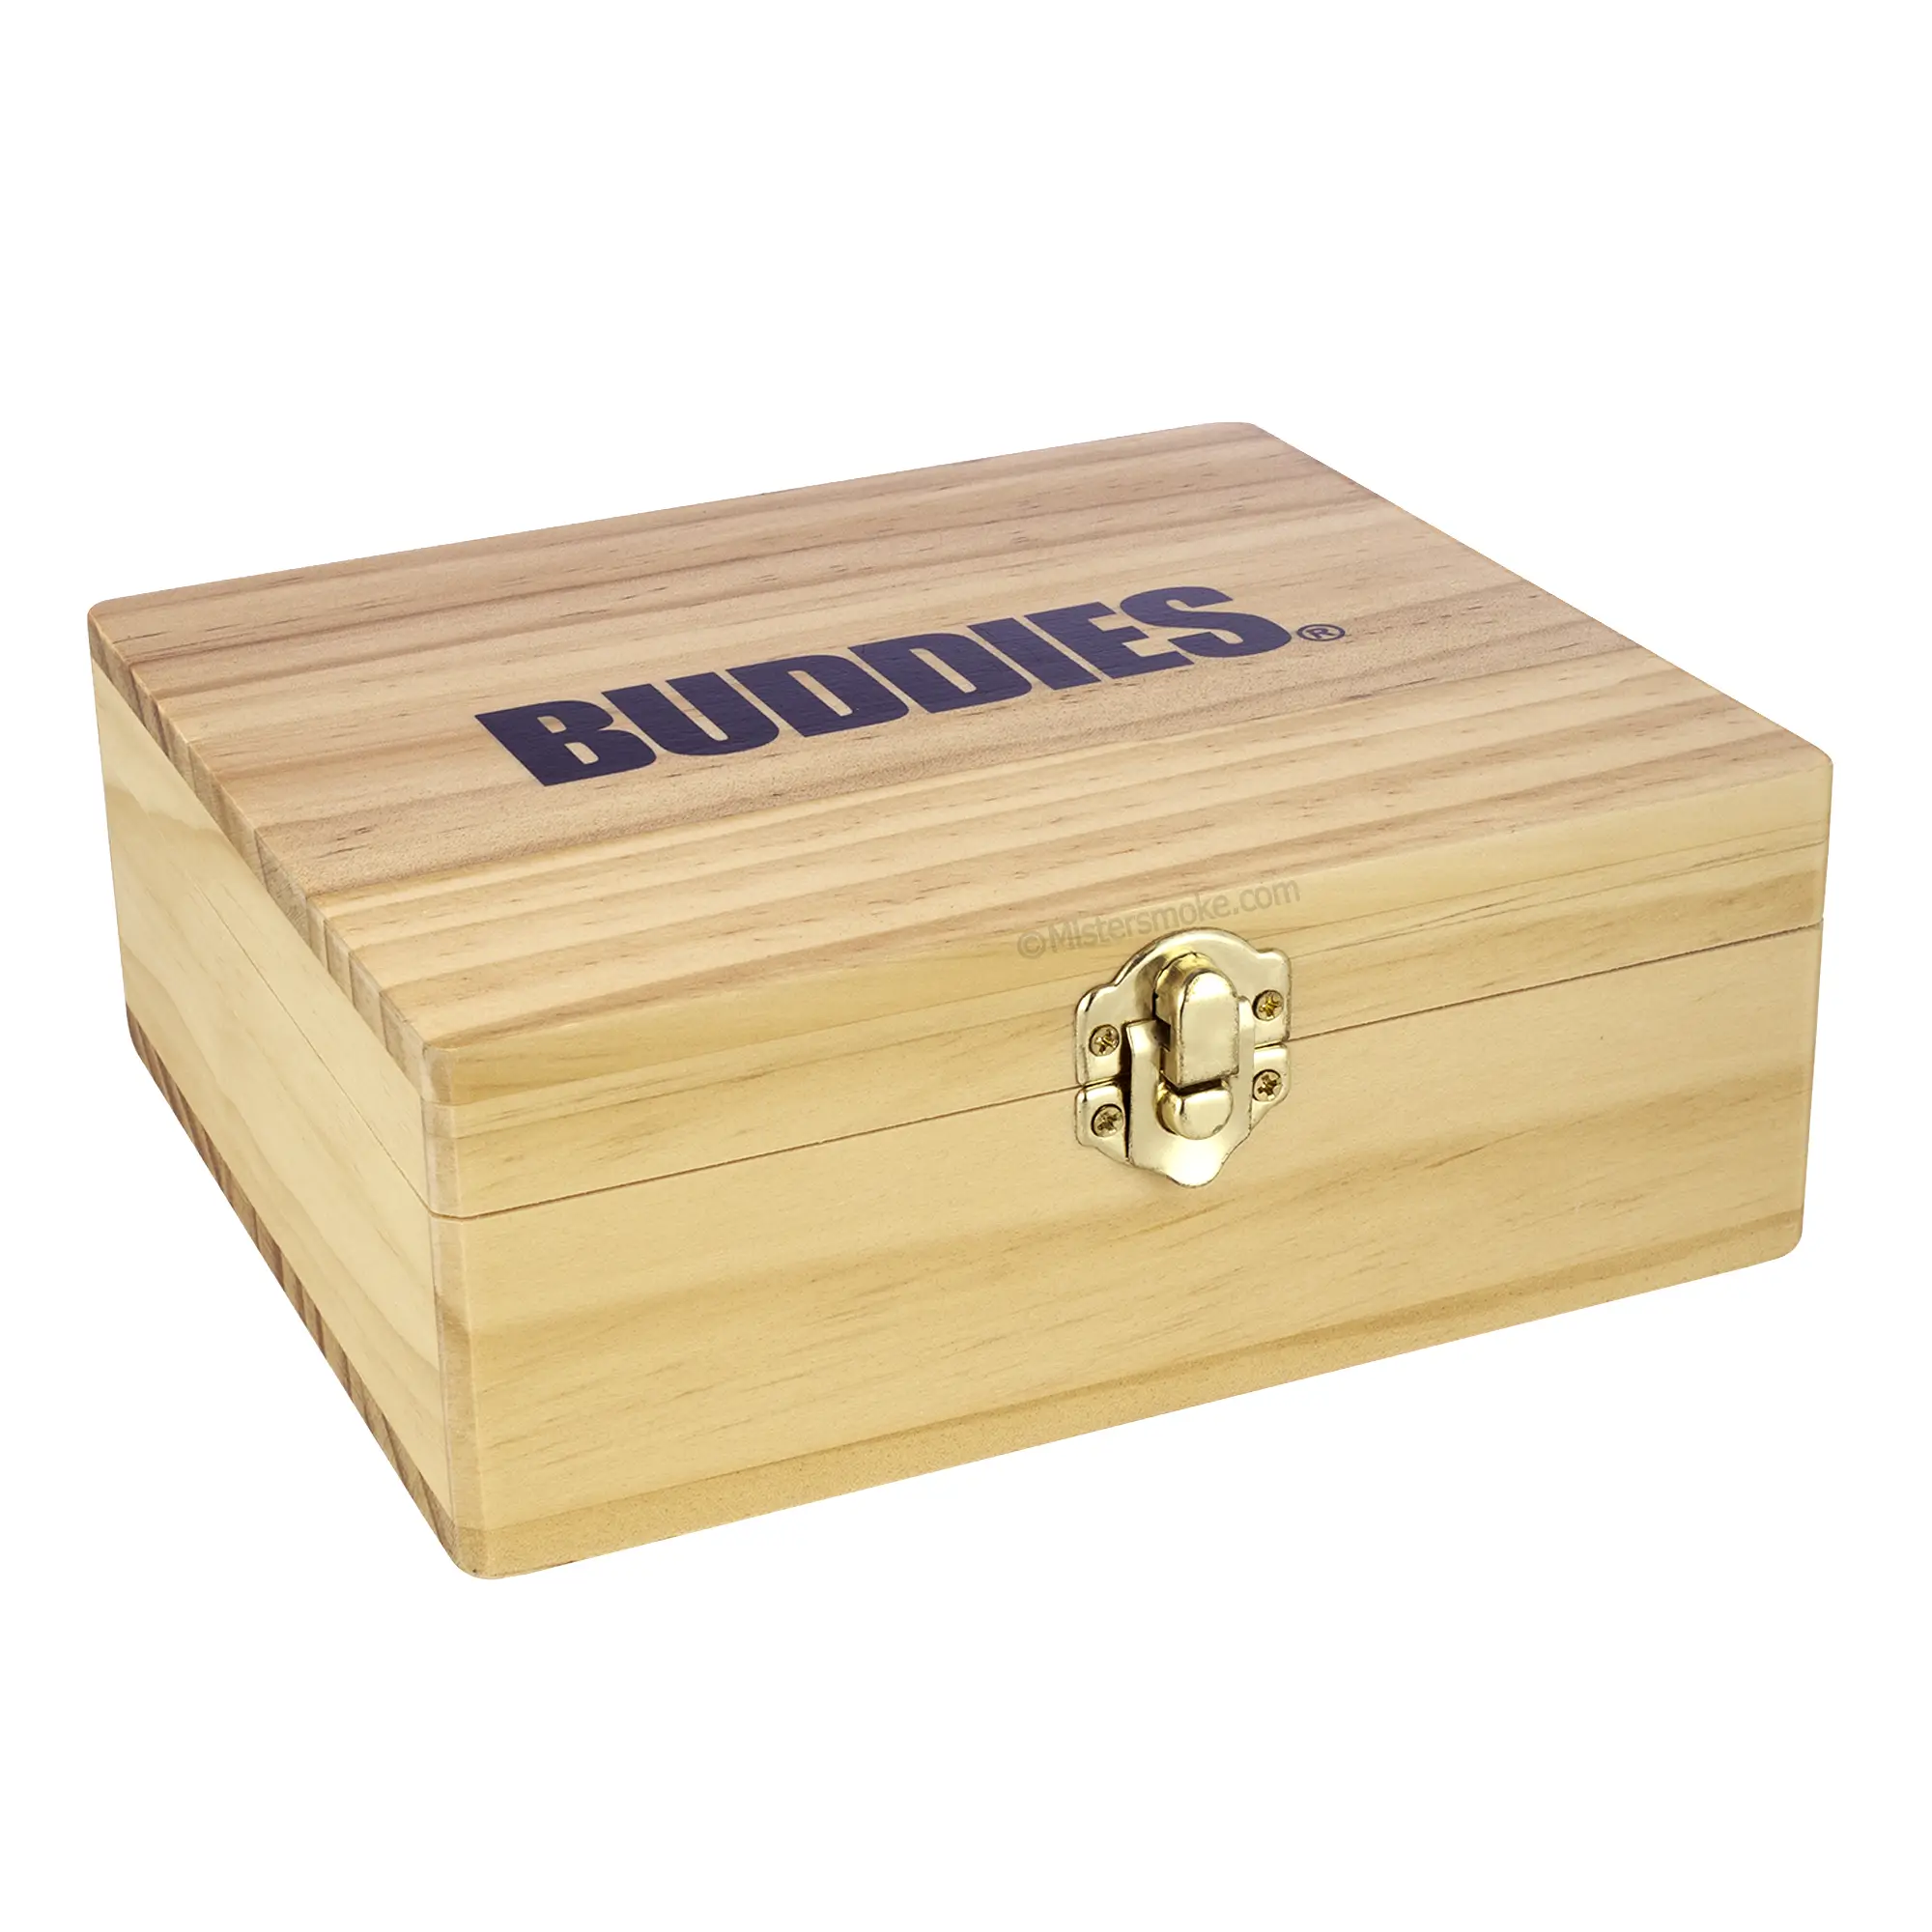 Box Fumeur French Stoner - Boutique SmonkeyBox